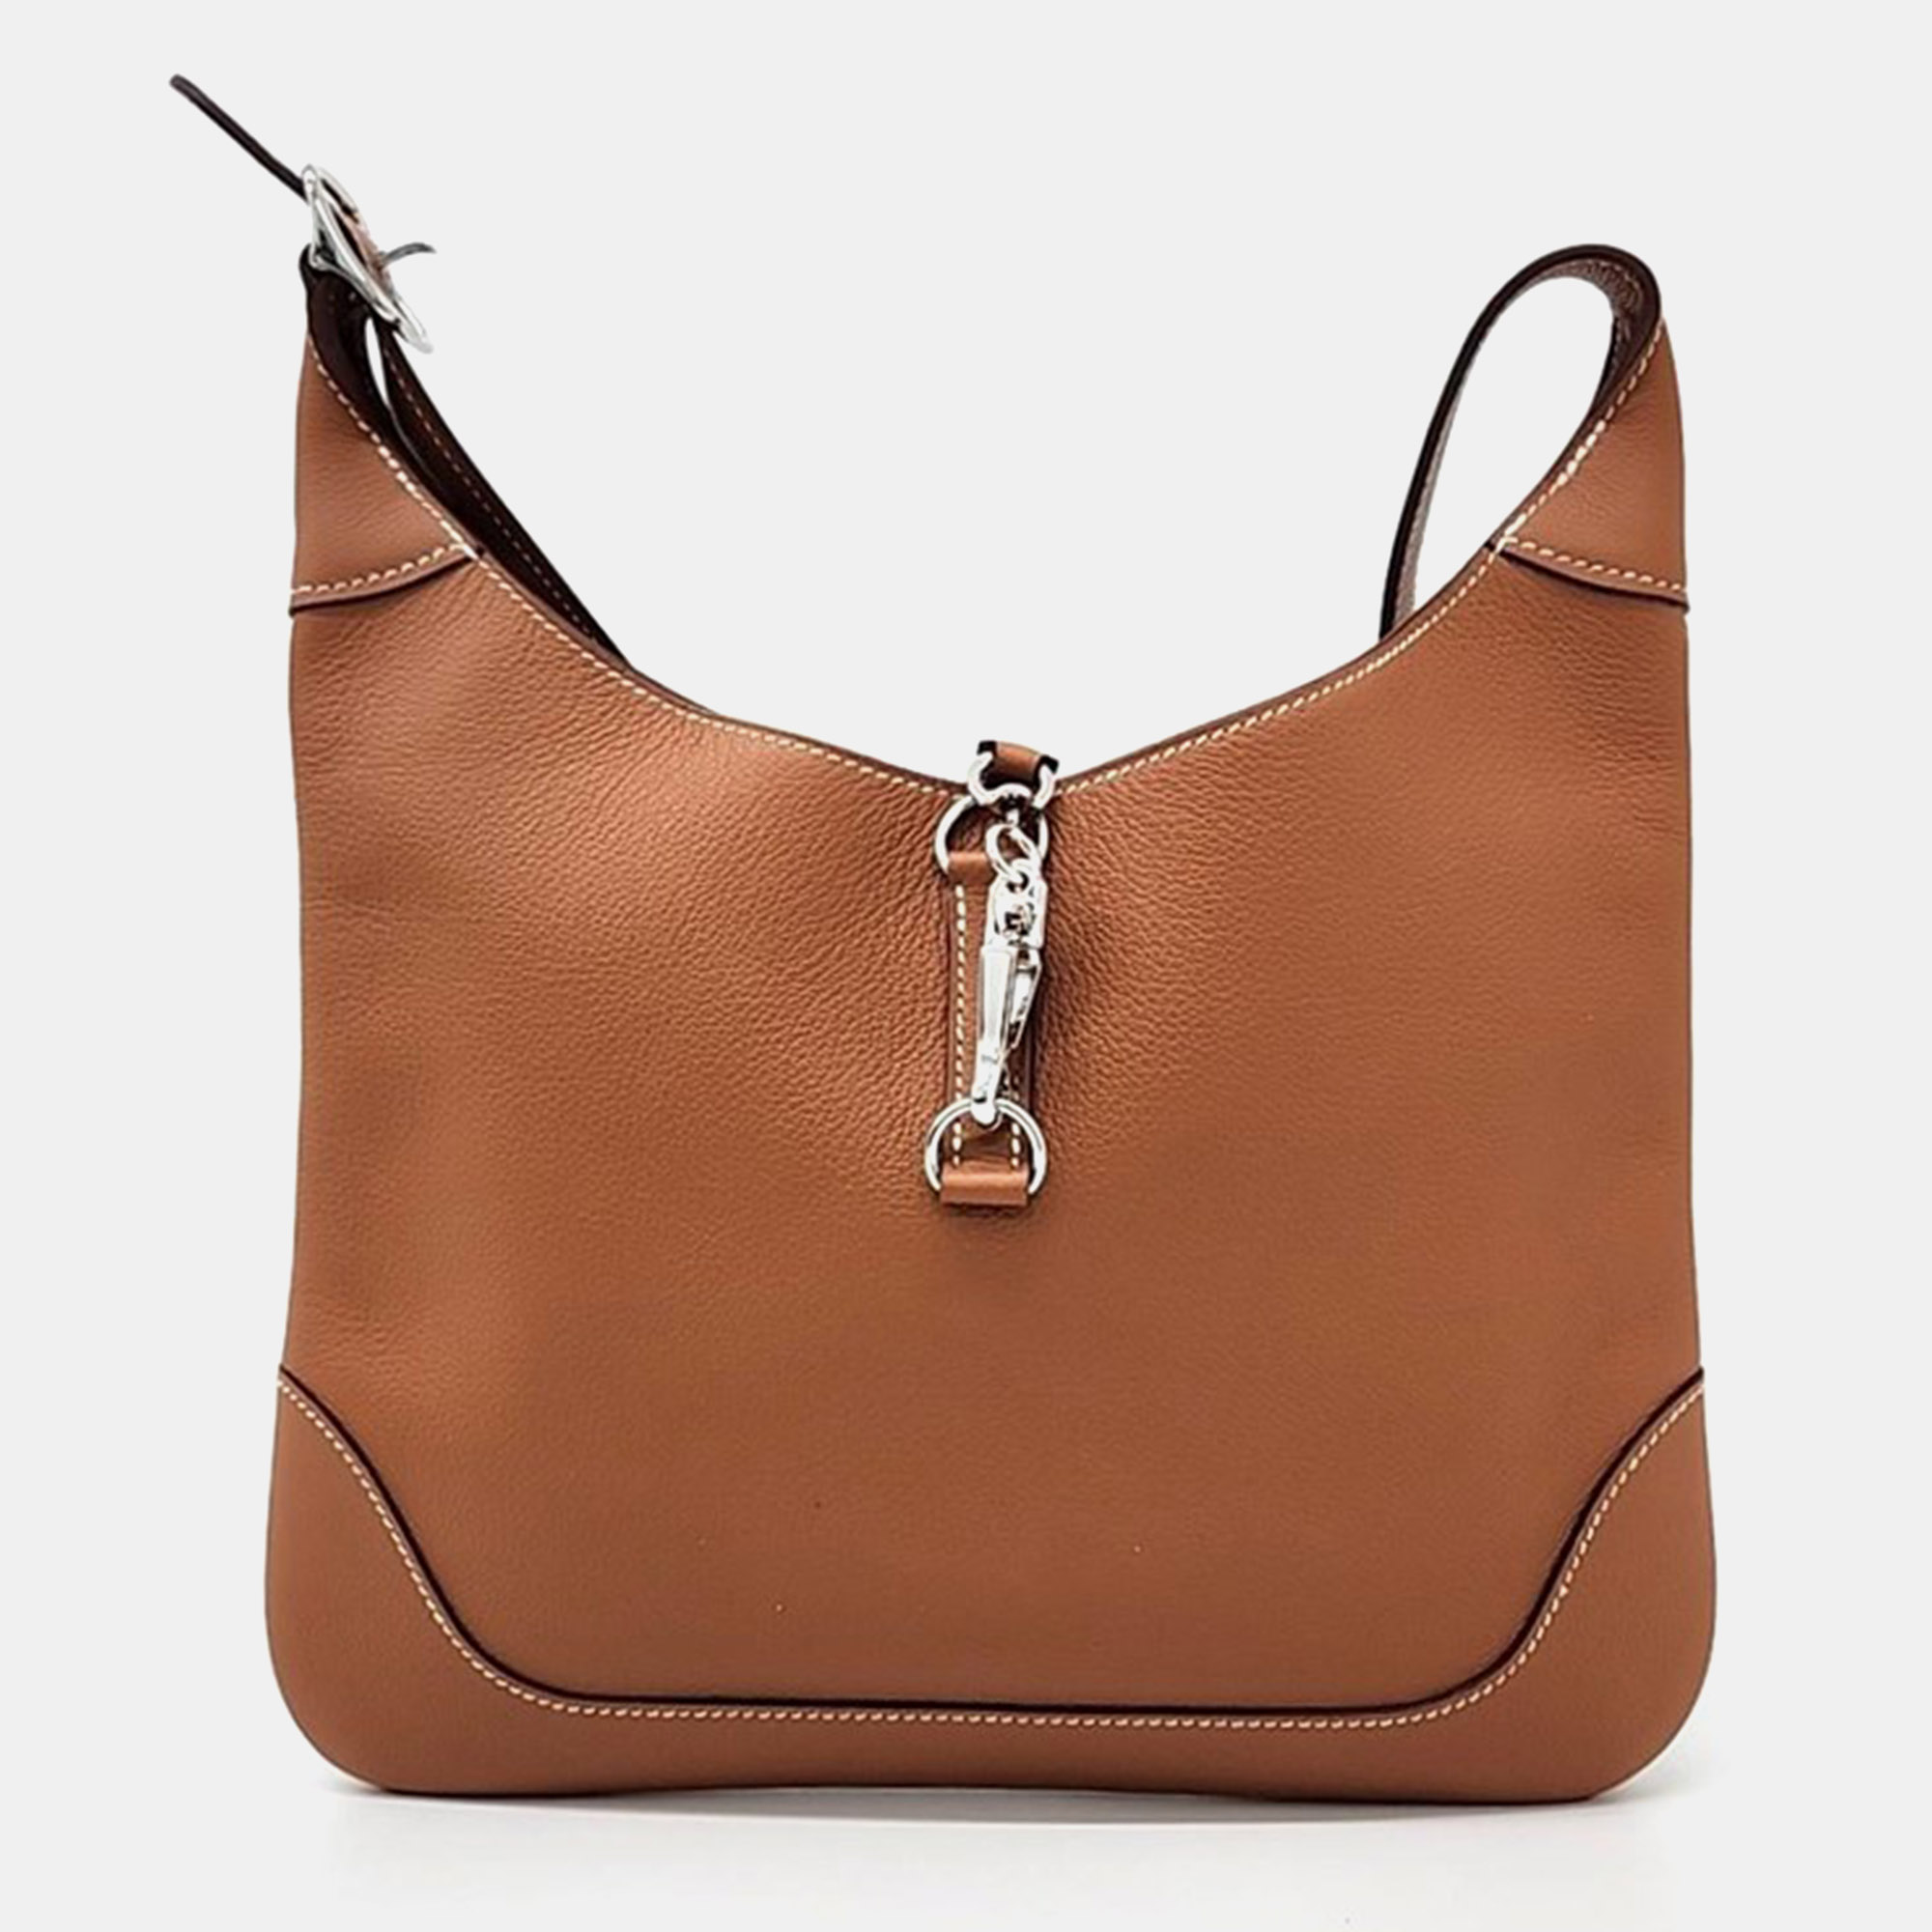 Hermes brown leather trim bag bag